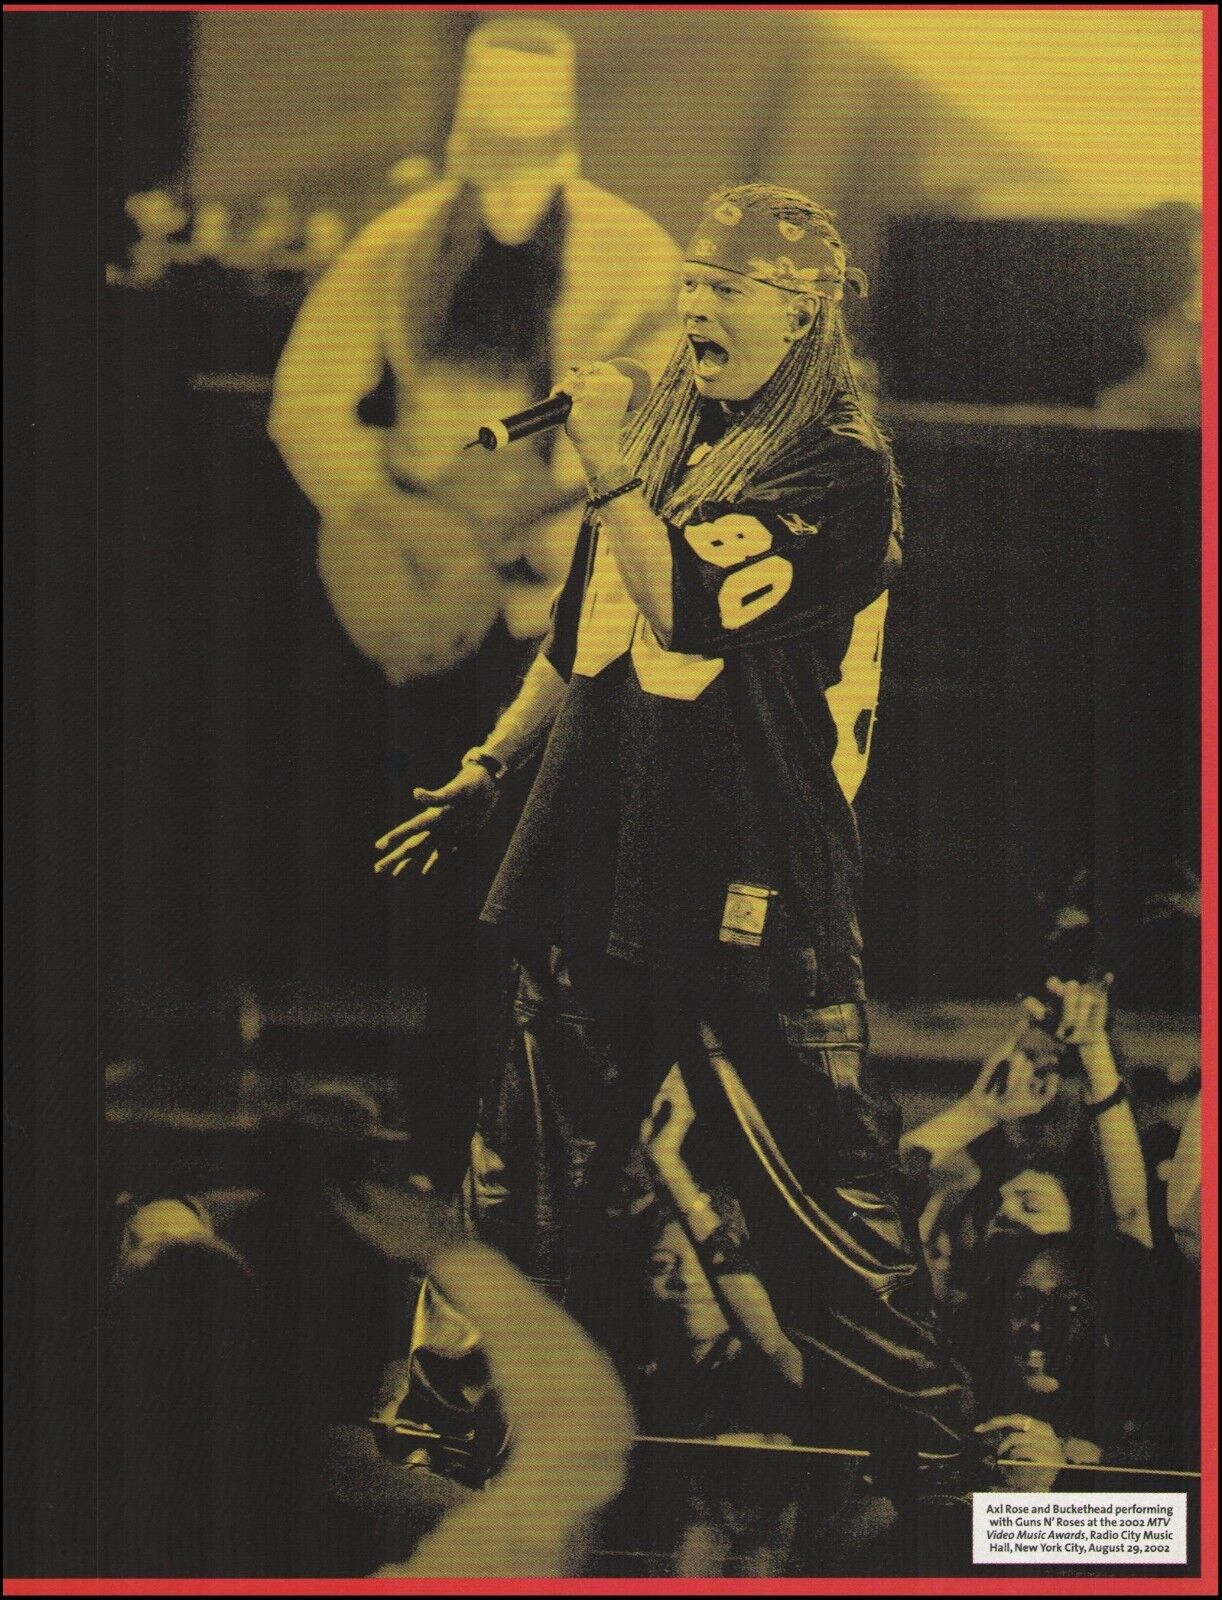 Axl Rose Guns N' Roses 2002 MTV Video Music Awards Show pin-up photo Buckethead